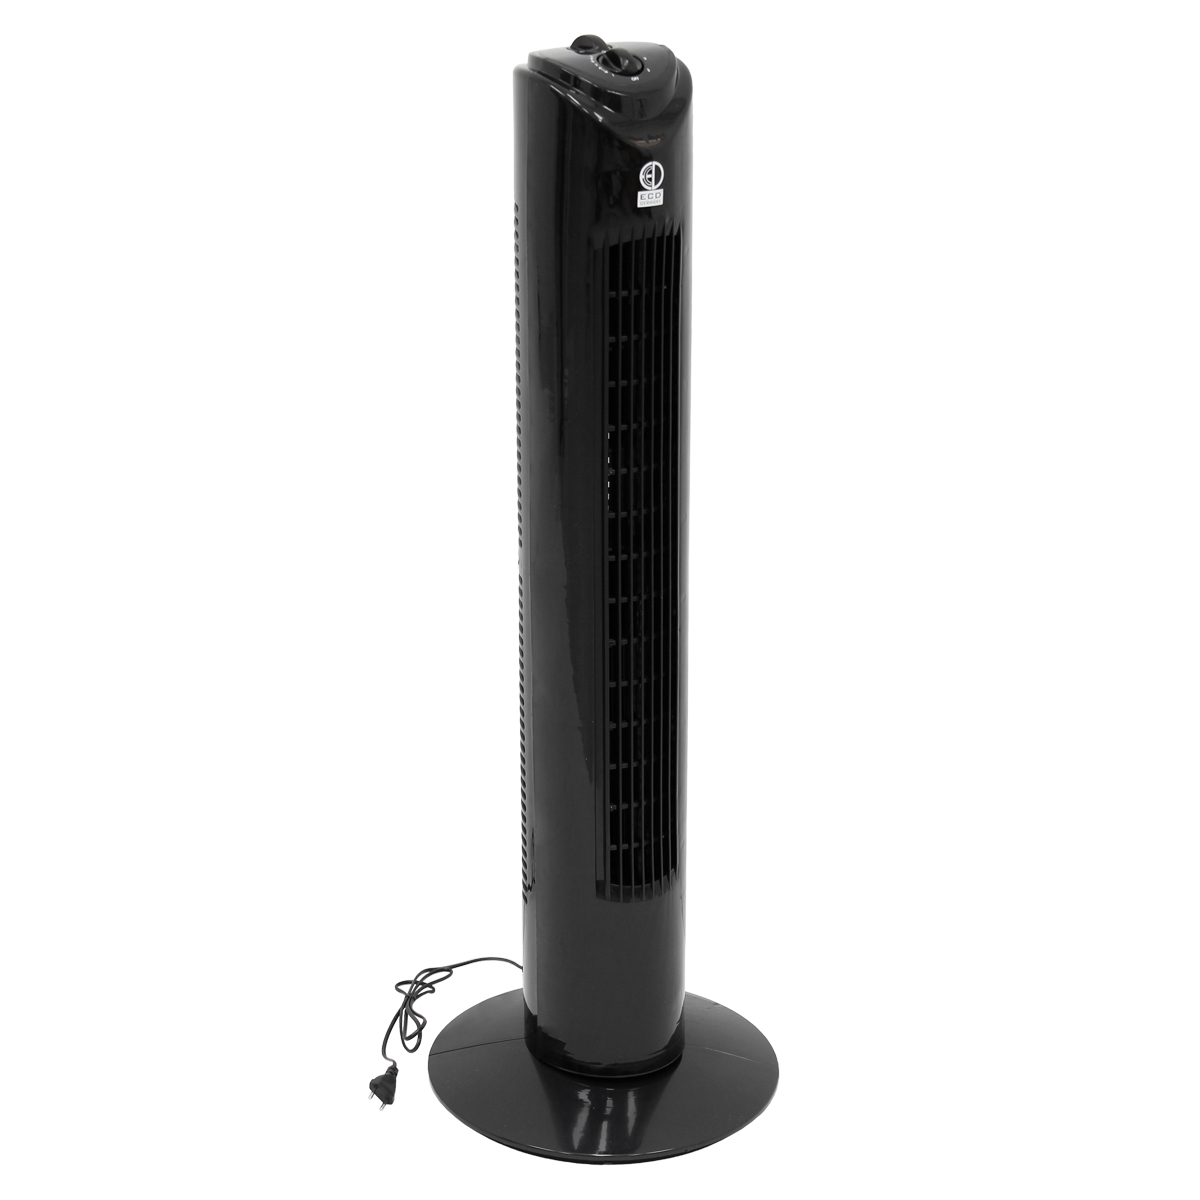 81cm Turmlüfter Turmventilator Ventilator Luftkühler Klimagerät Lüfter Säule 45W 